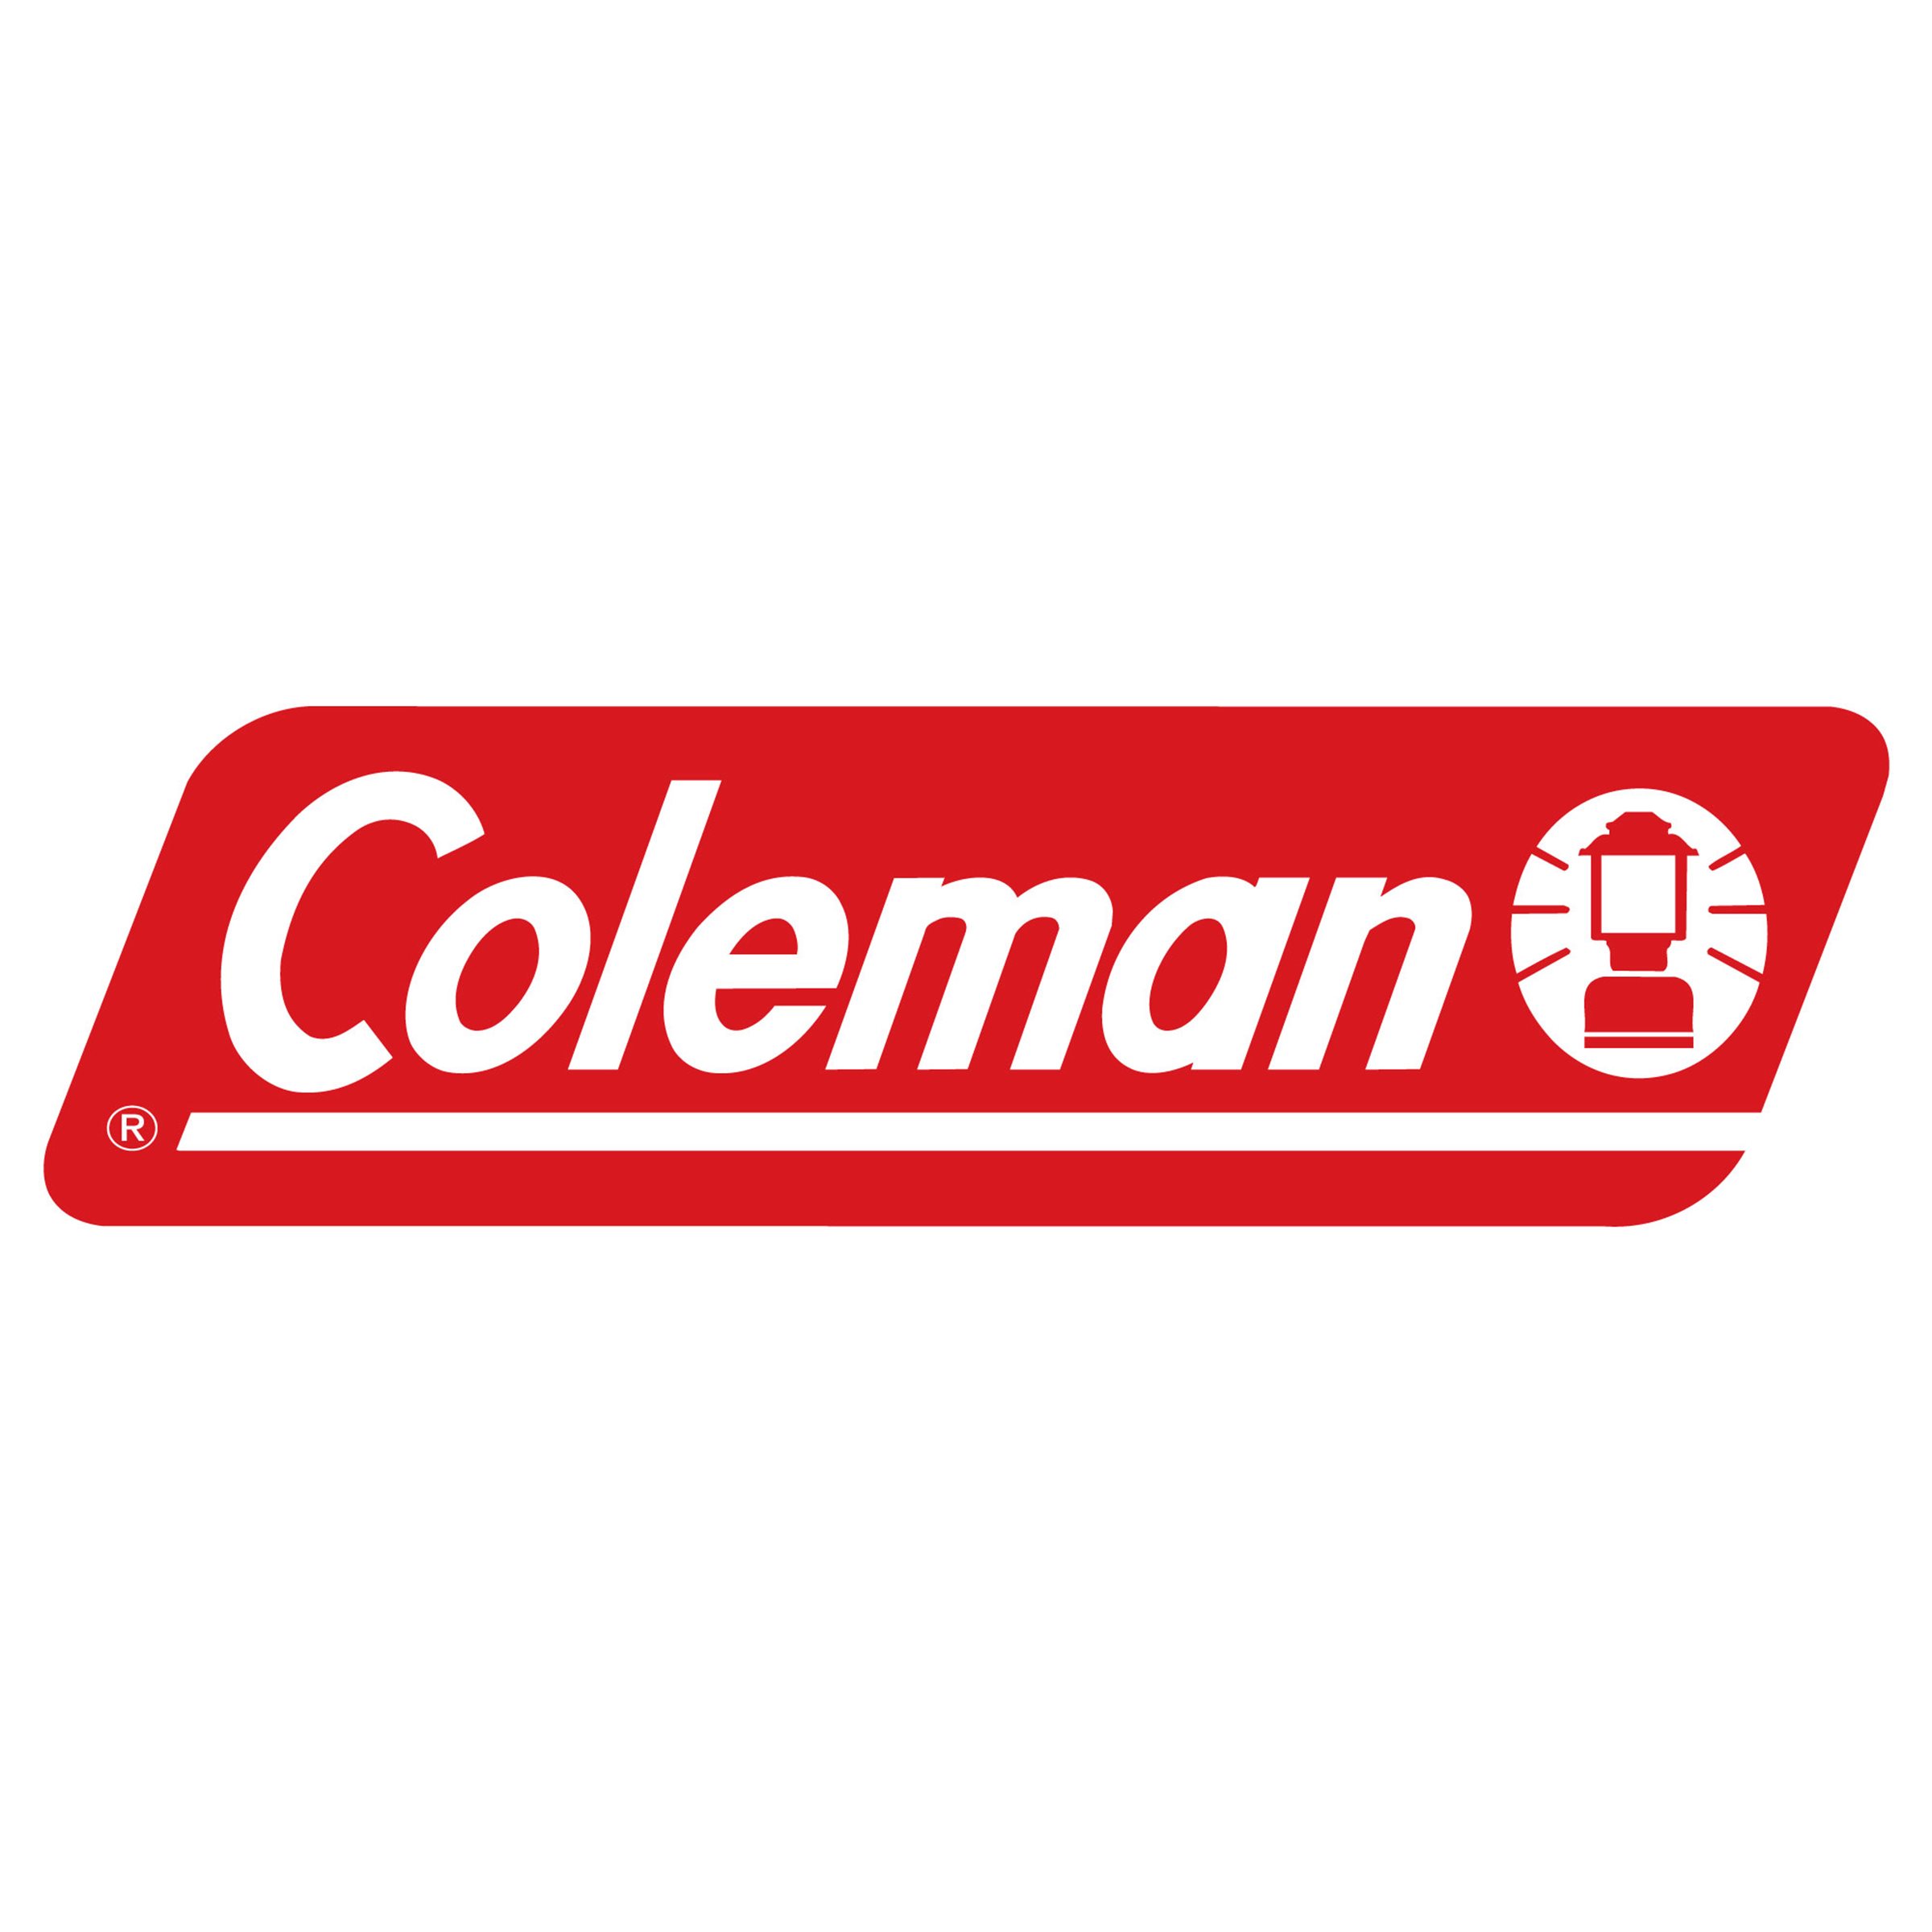 A_coleman